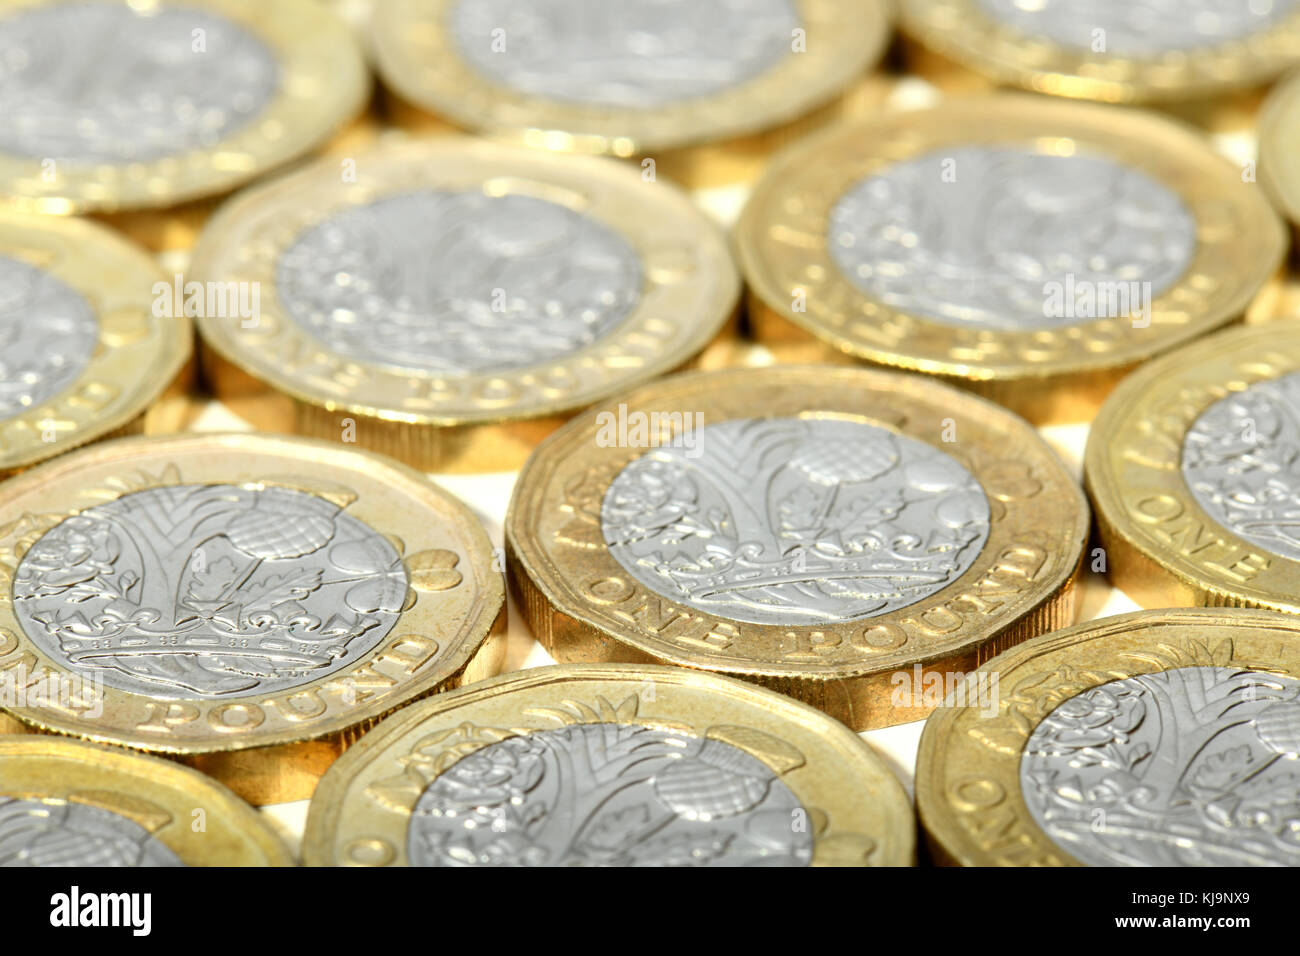 new one pound british coins Stock Photo